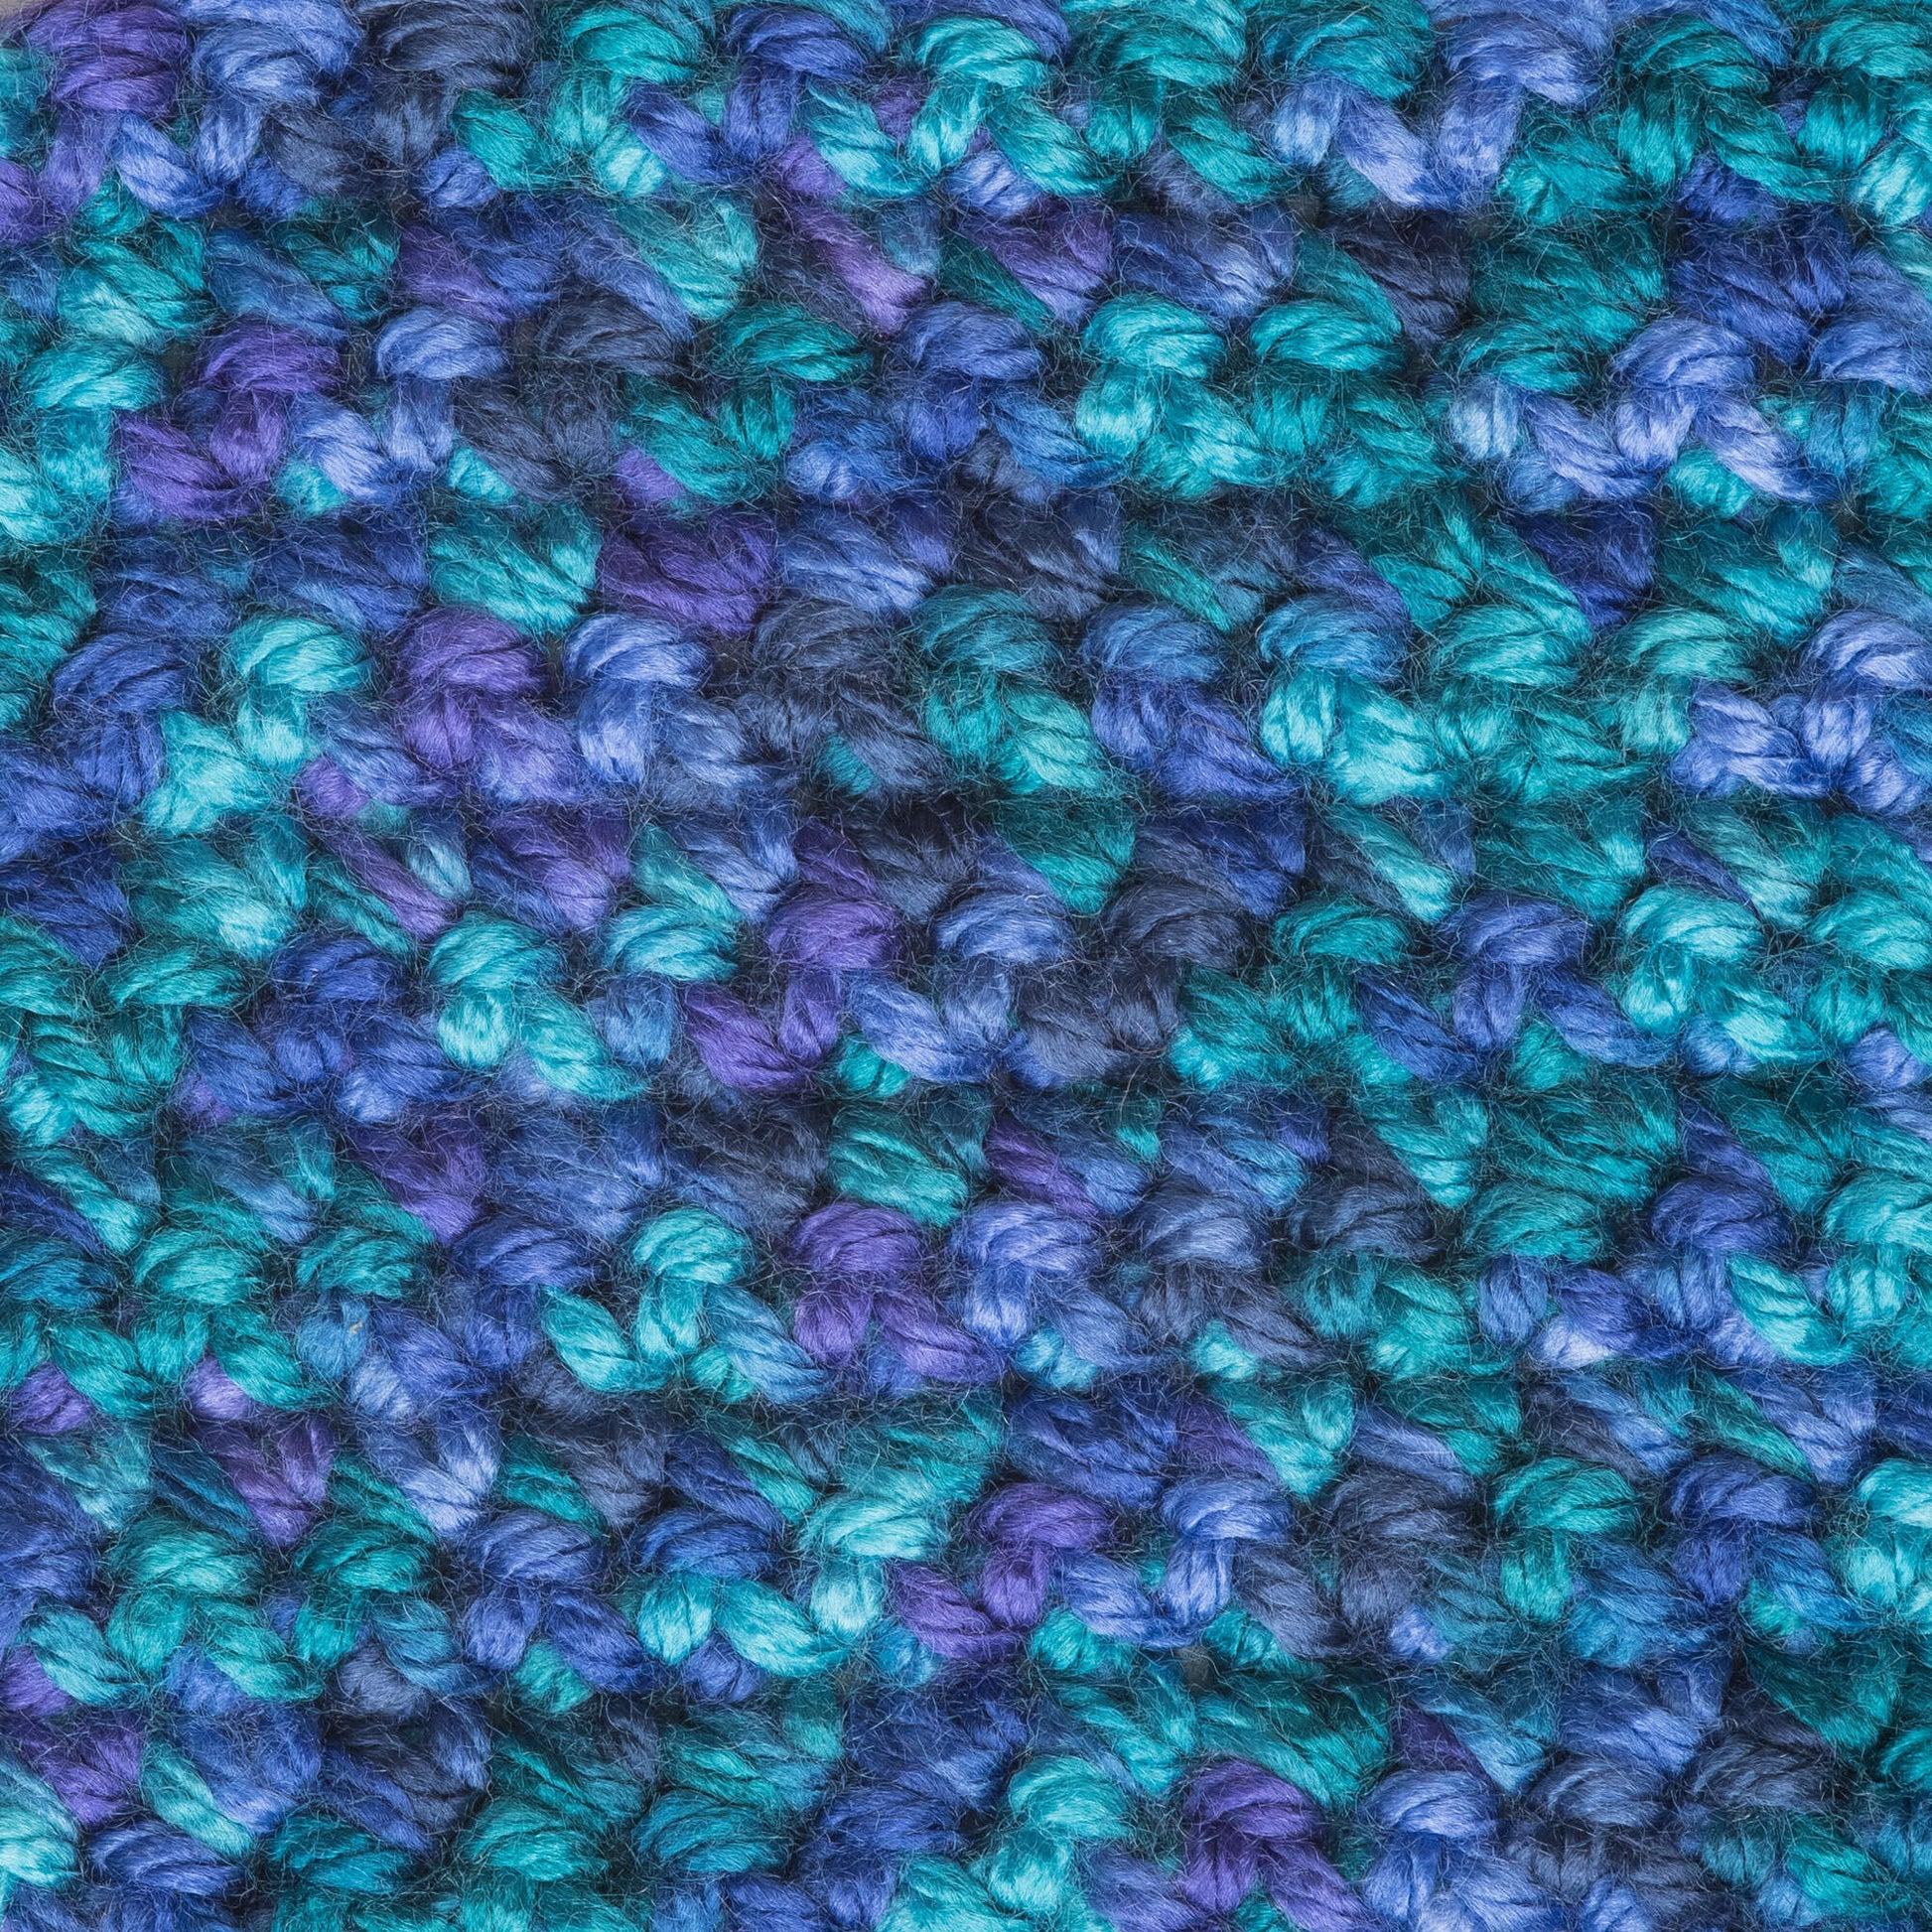 Caron Simply Soft Yarn - Purple - NOTM325440